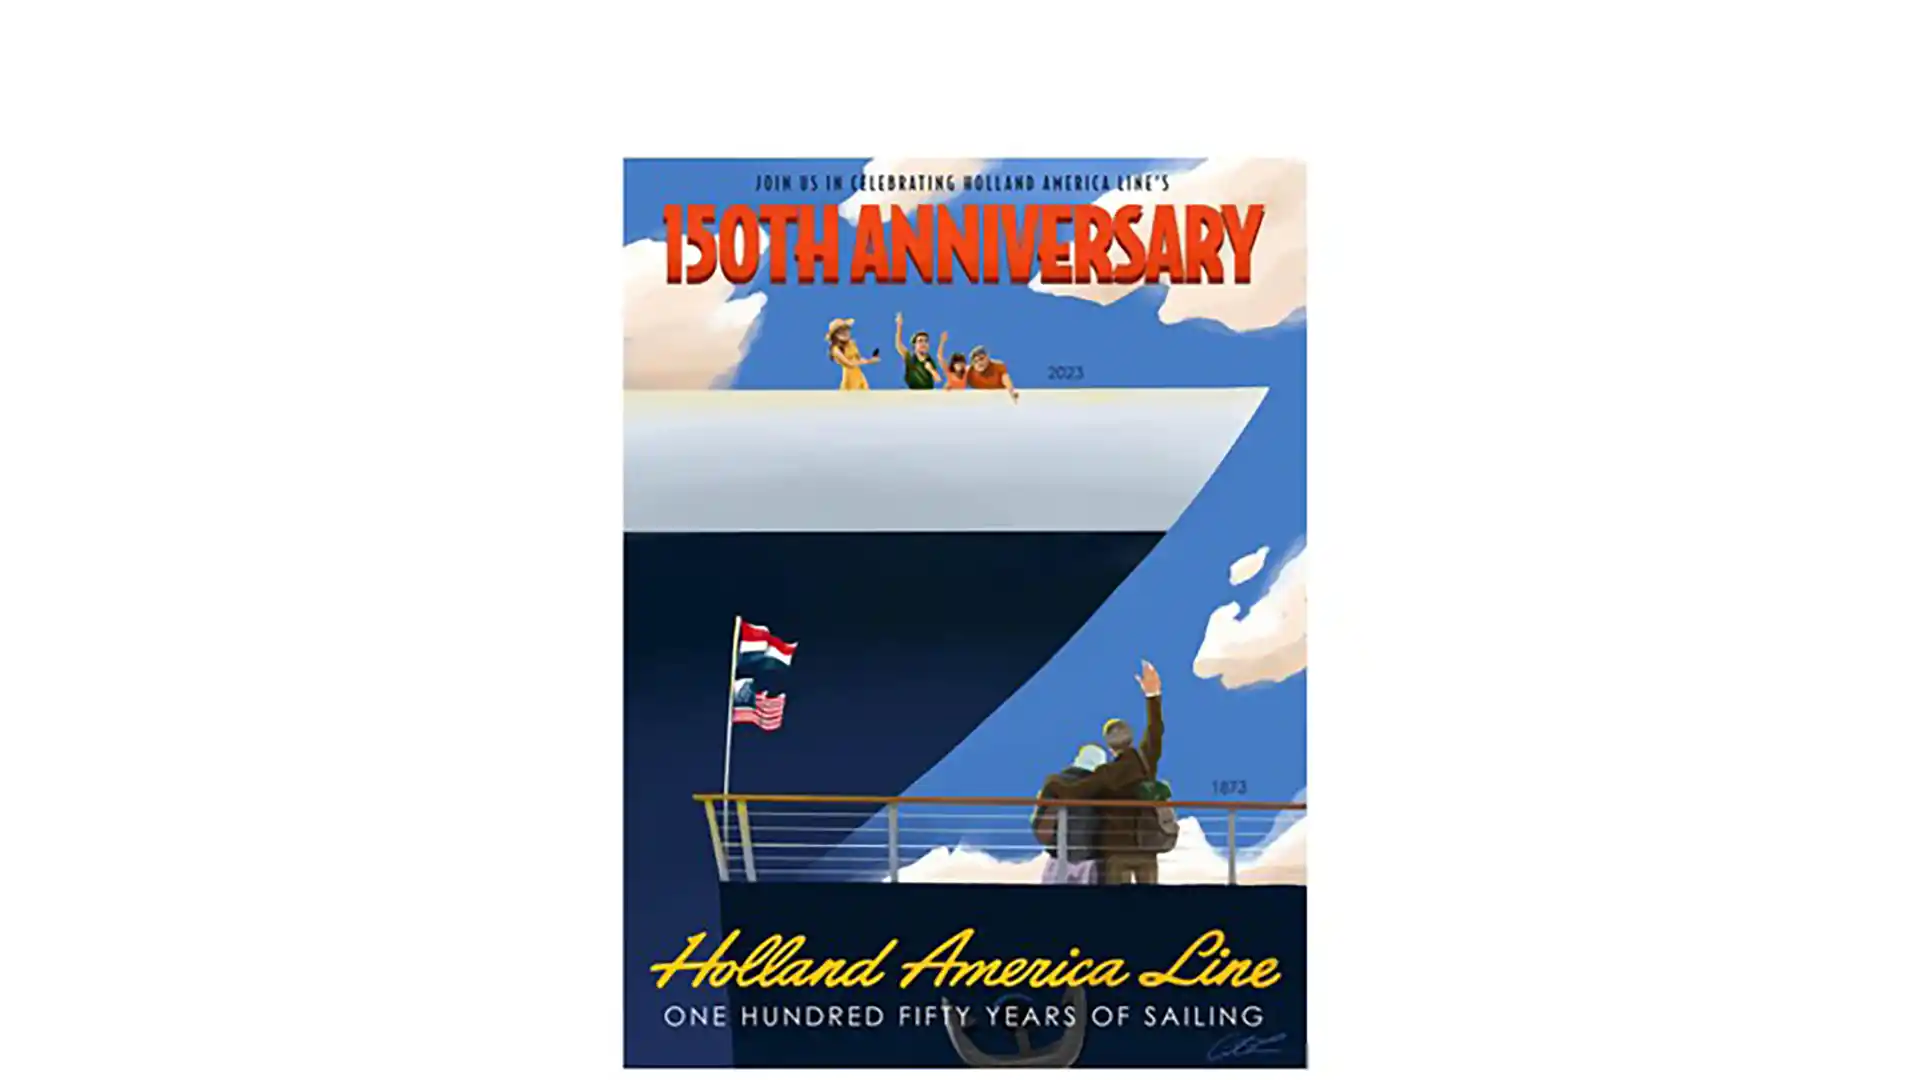 150th anniversary poster contest winner celebrating Holland America Line.